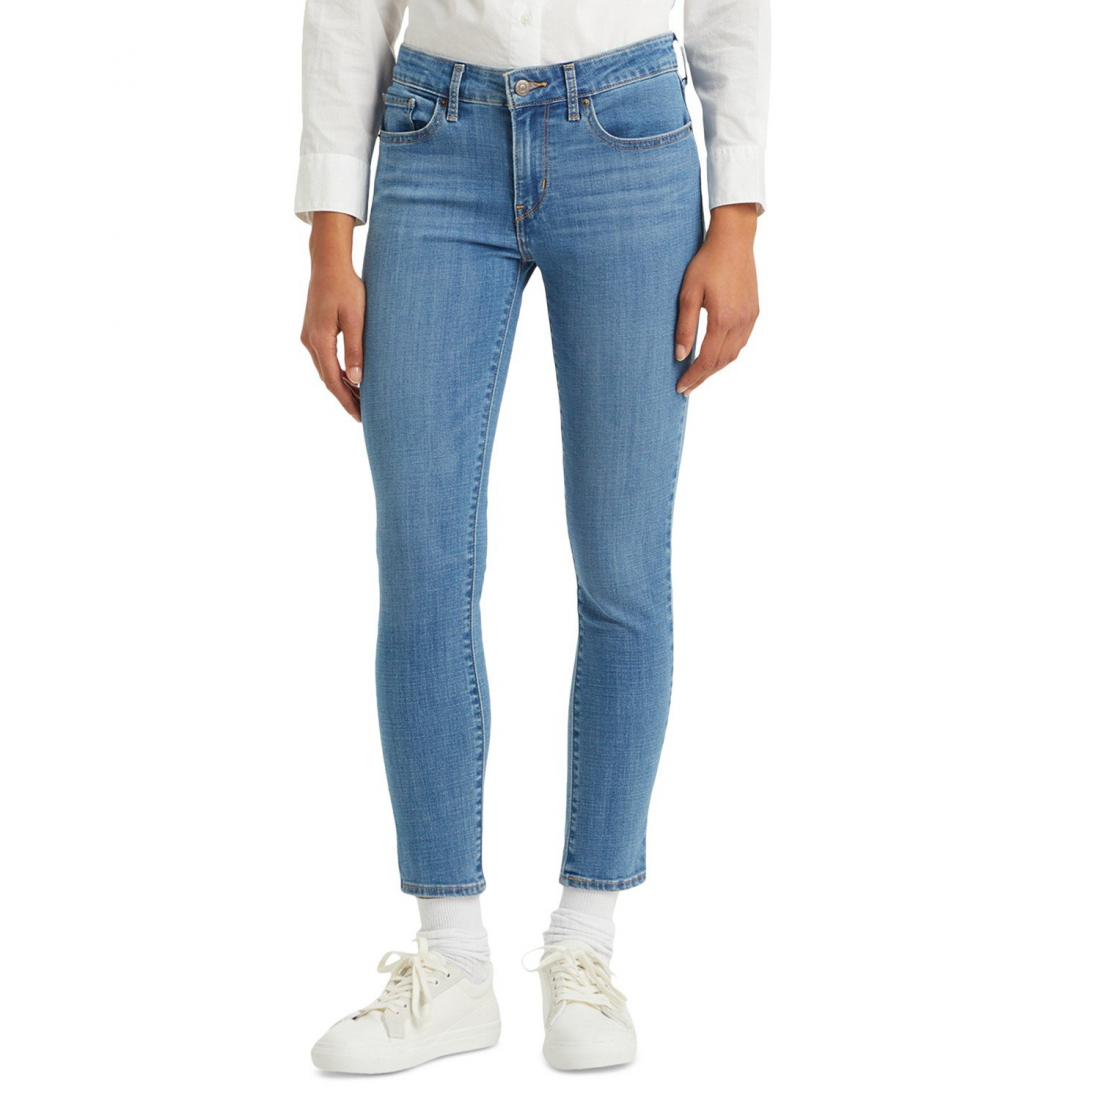 Women's '711 Ripped' Skinny Jeans